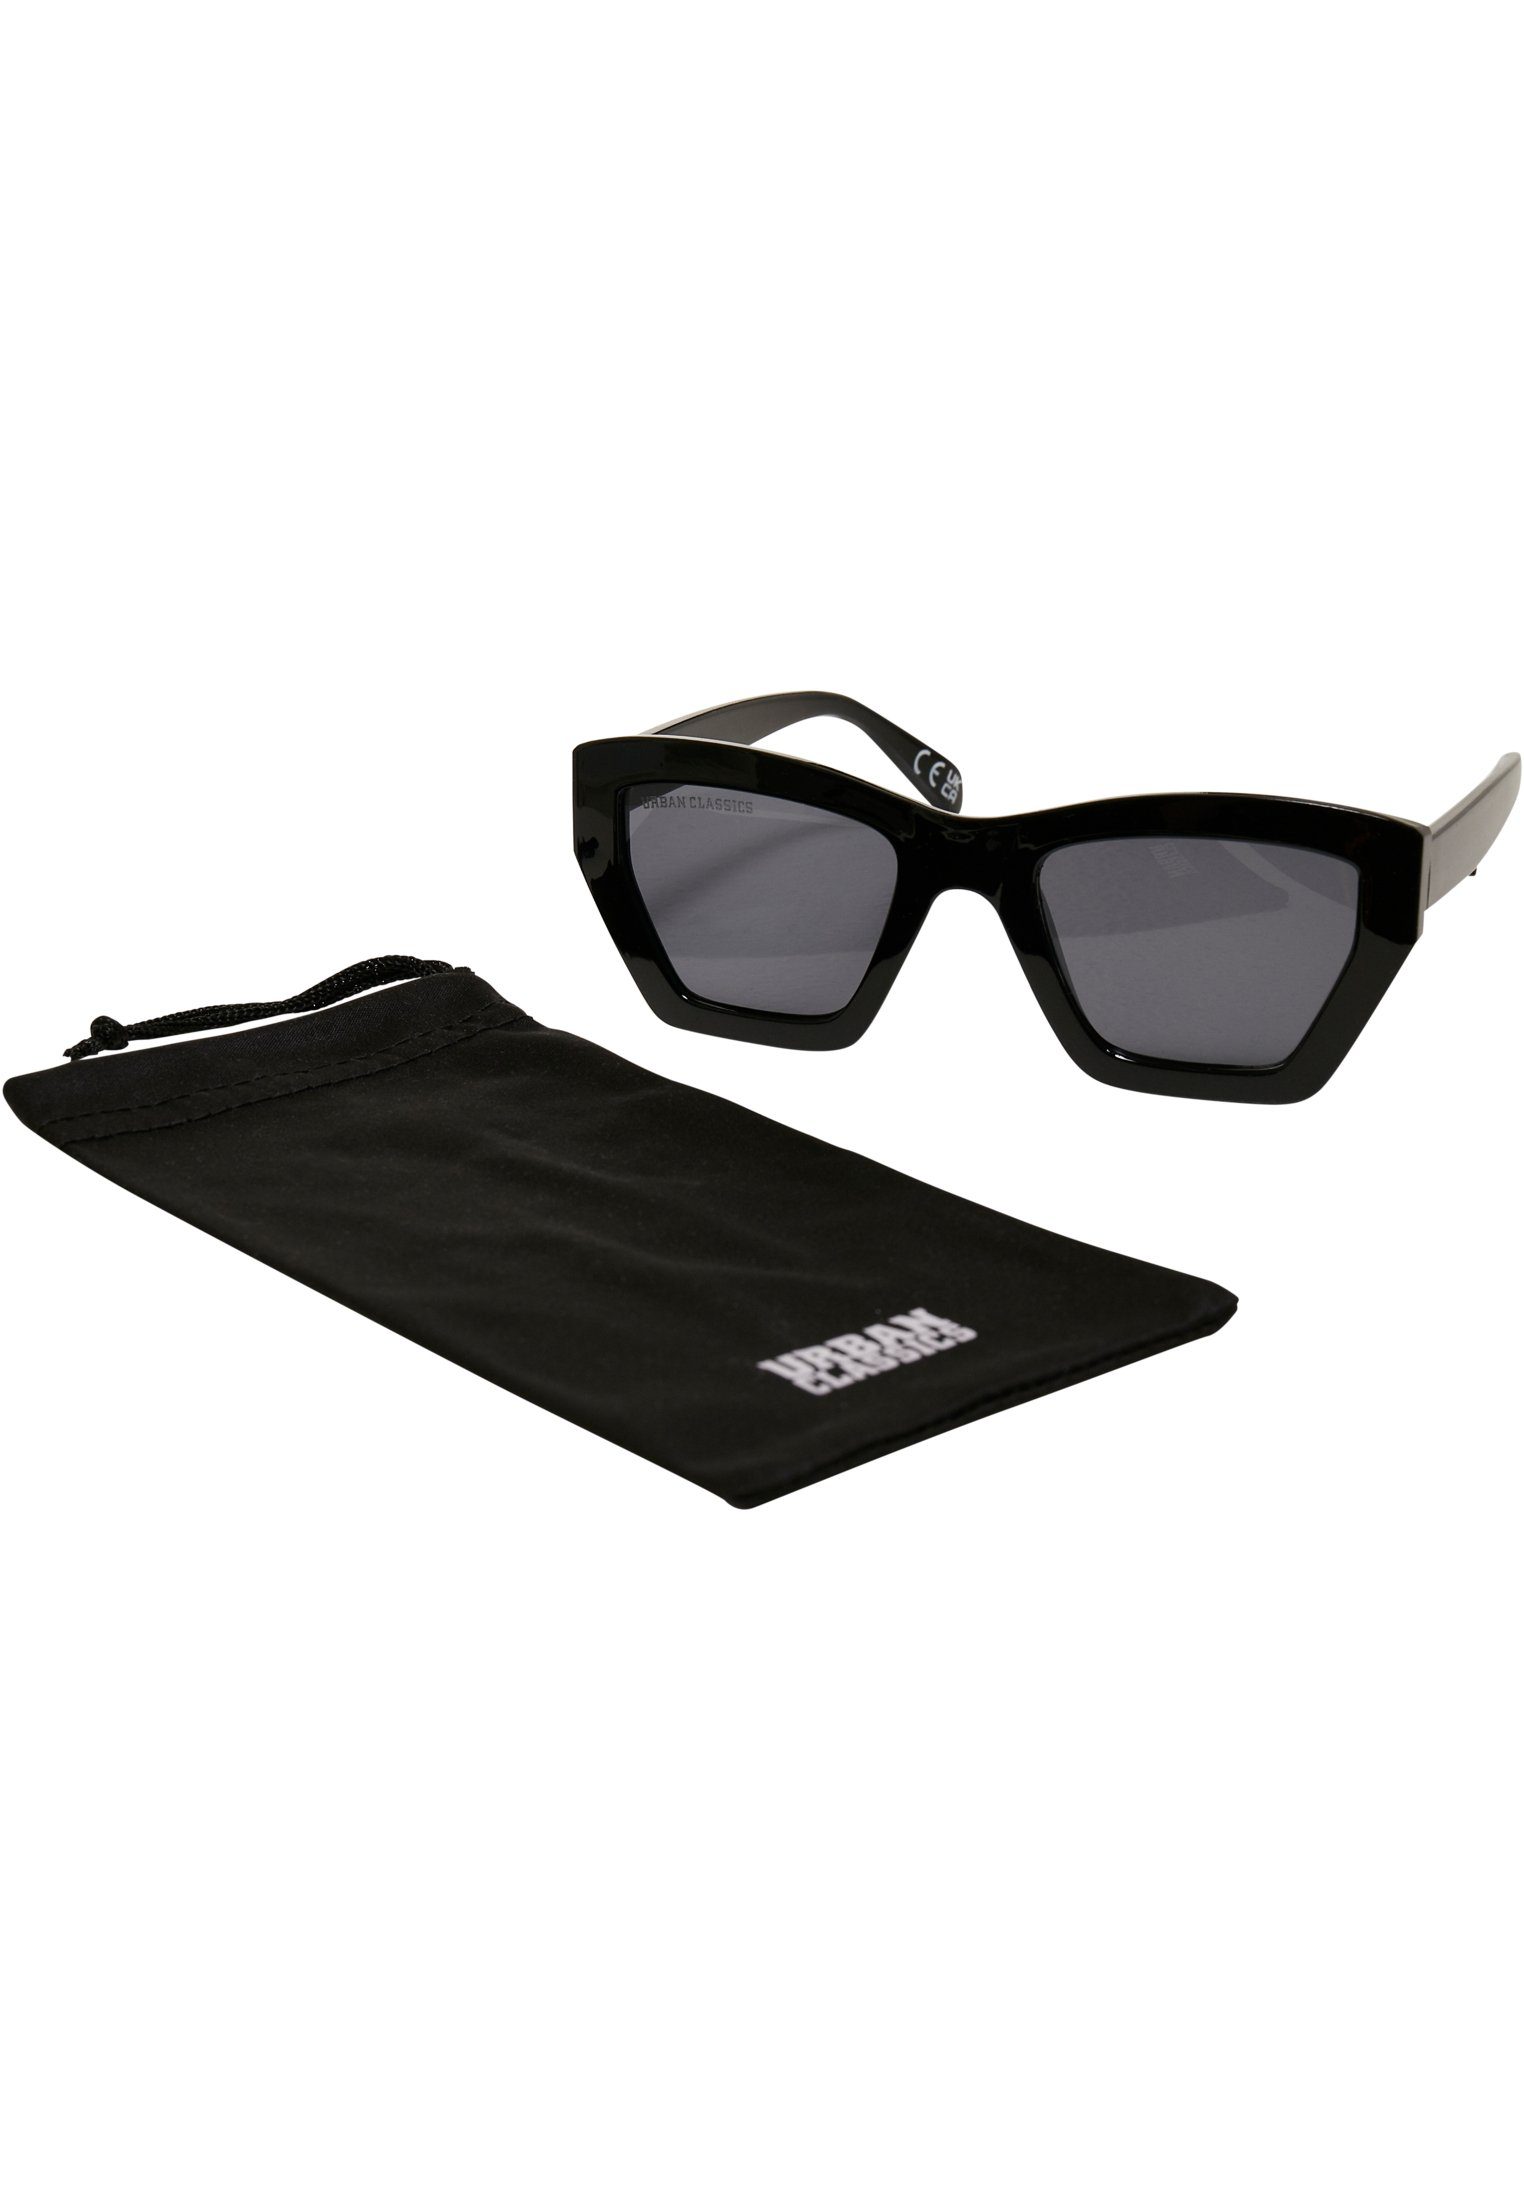 Sunglasses Grande Unisex black CLASSICS Sonnenbrille URBAN Rio